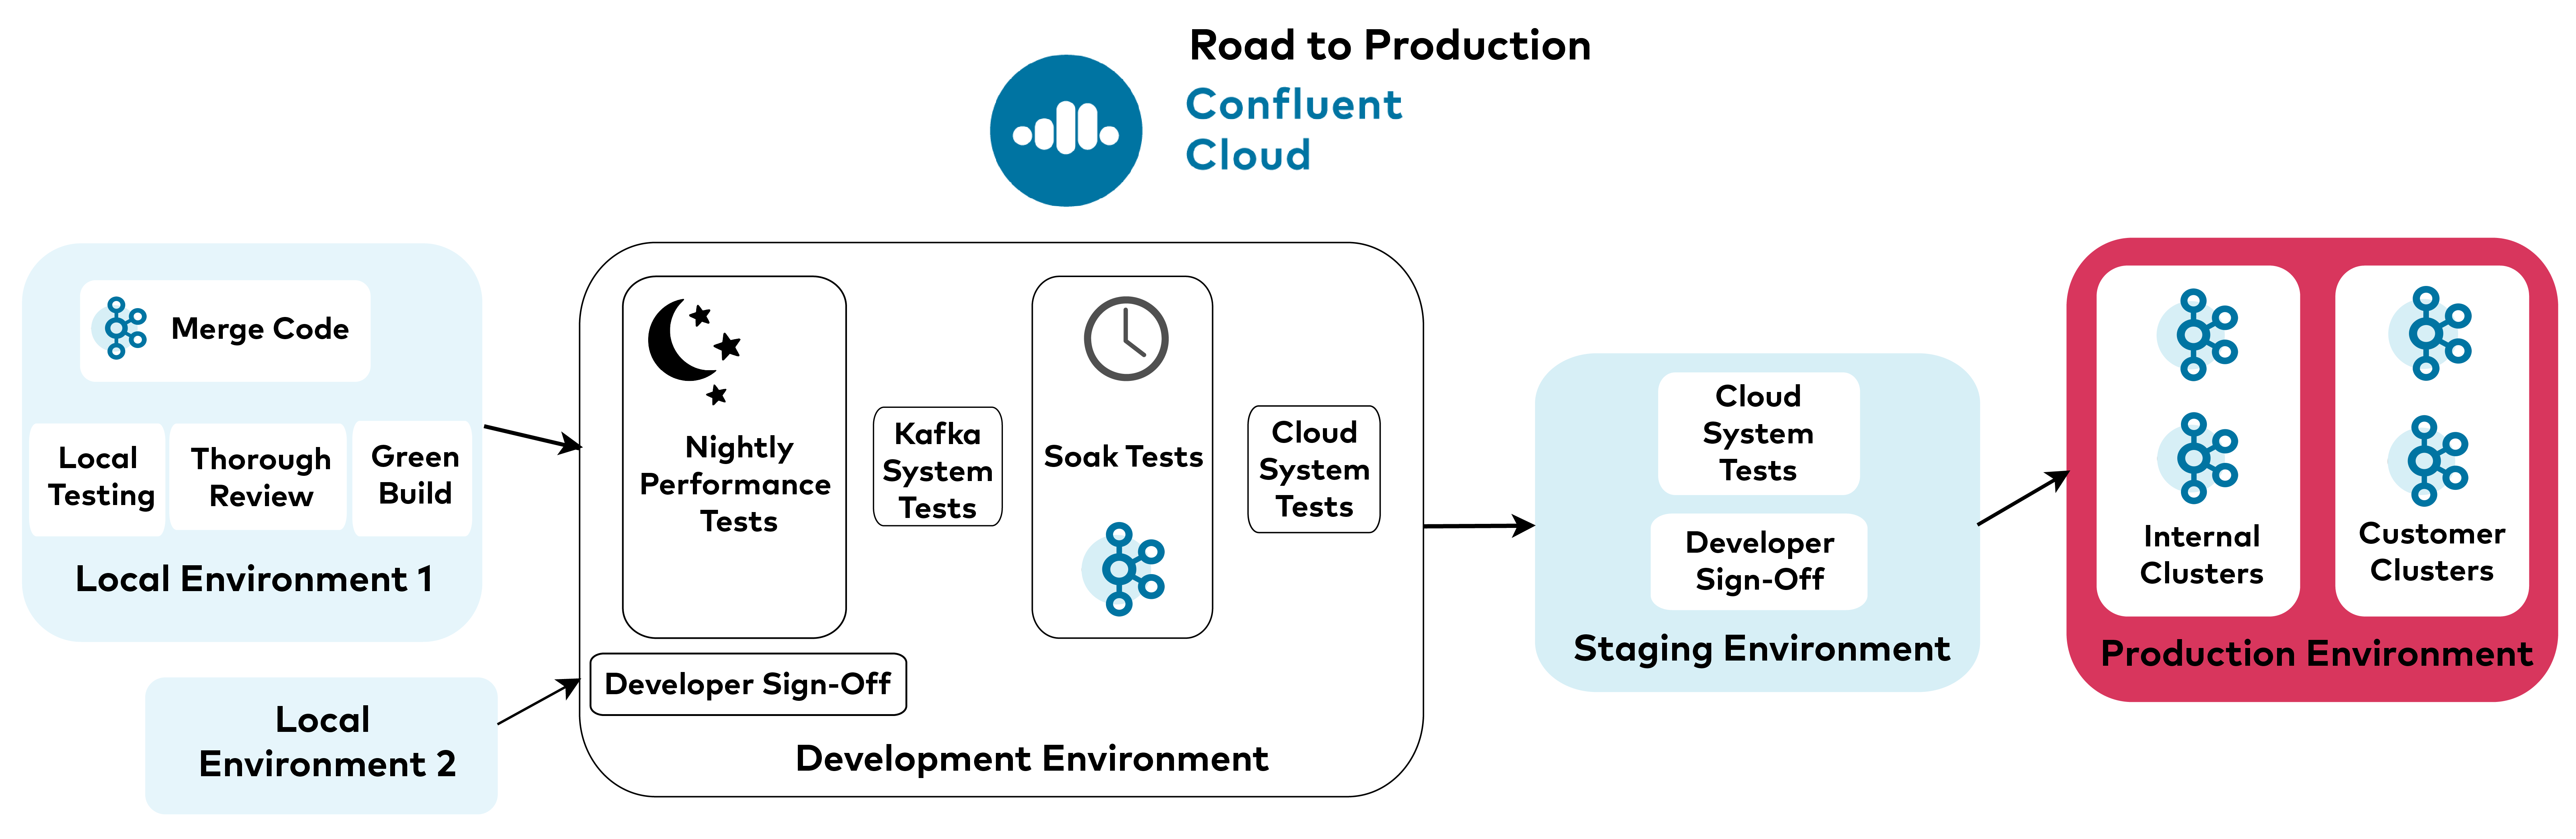 Confluent Cloud's Road to Production